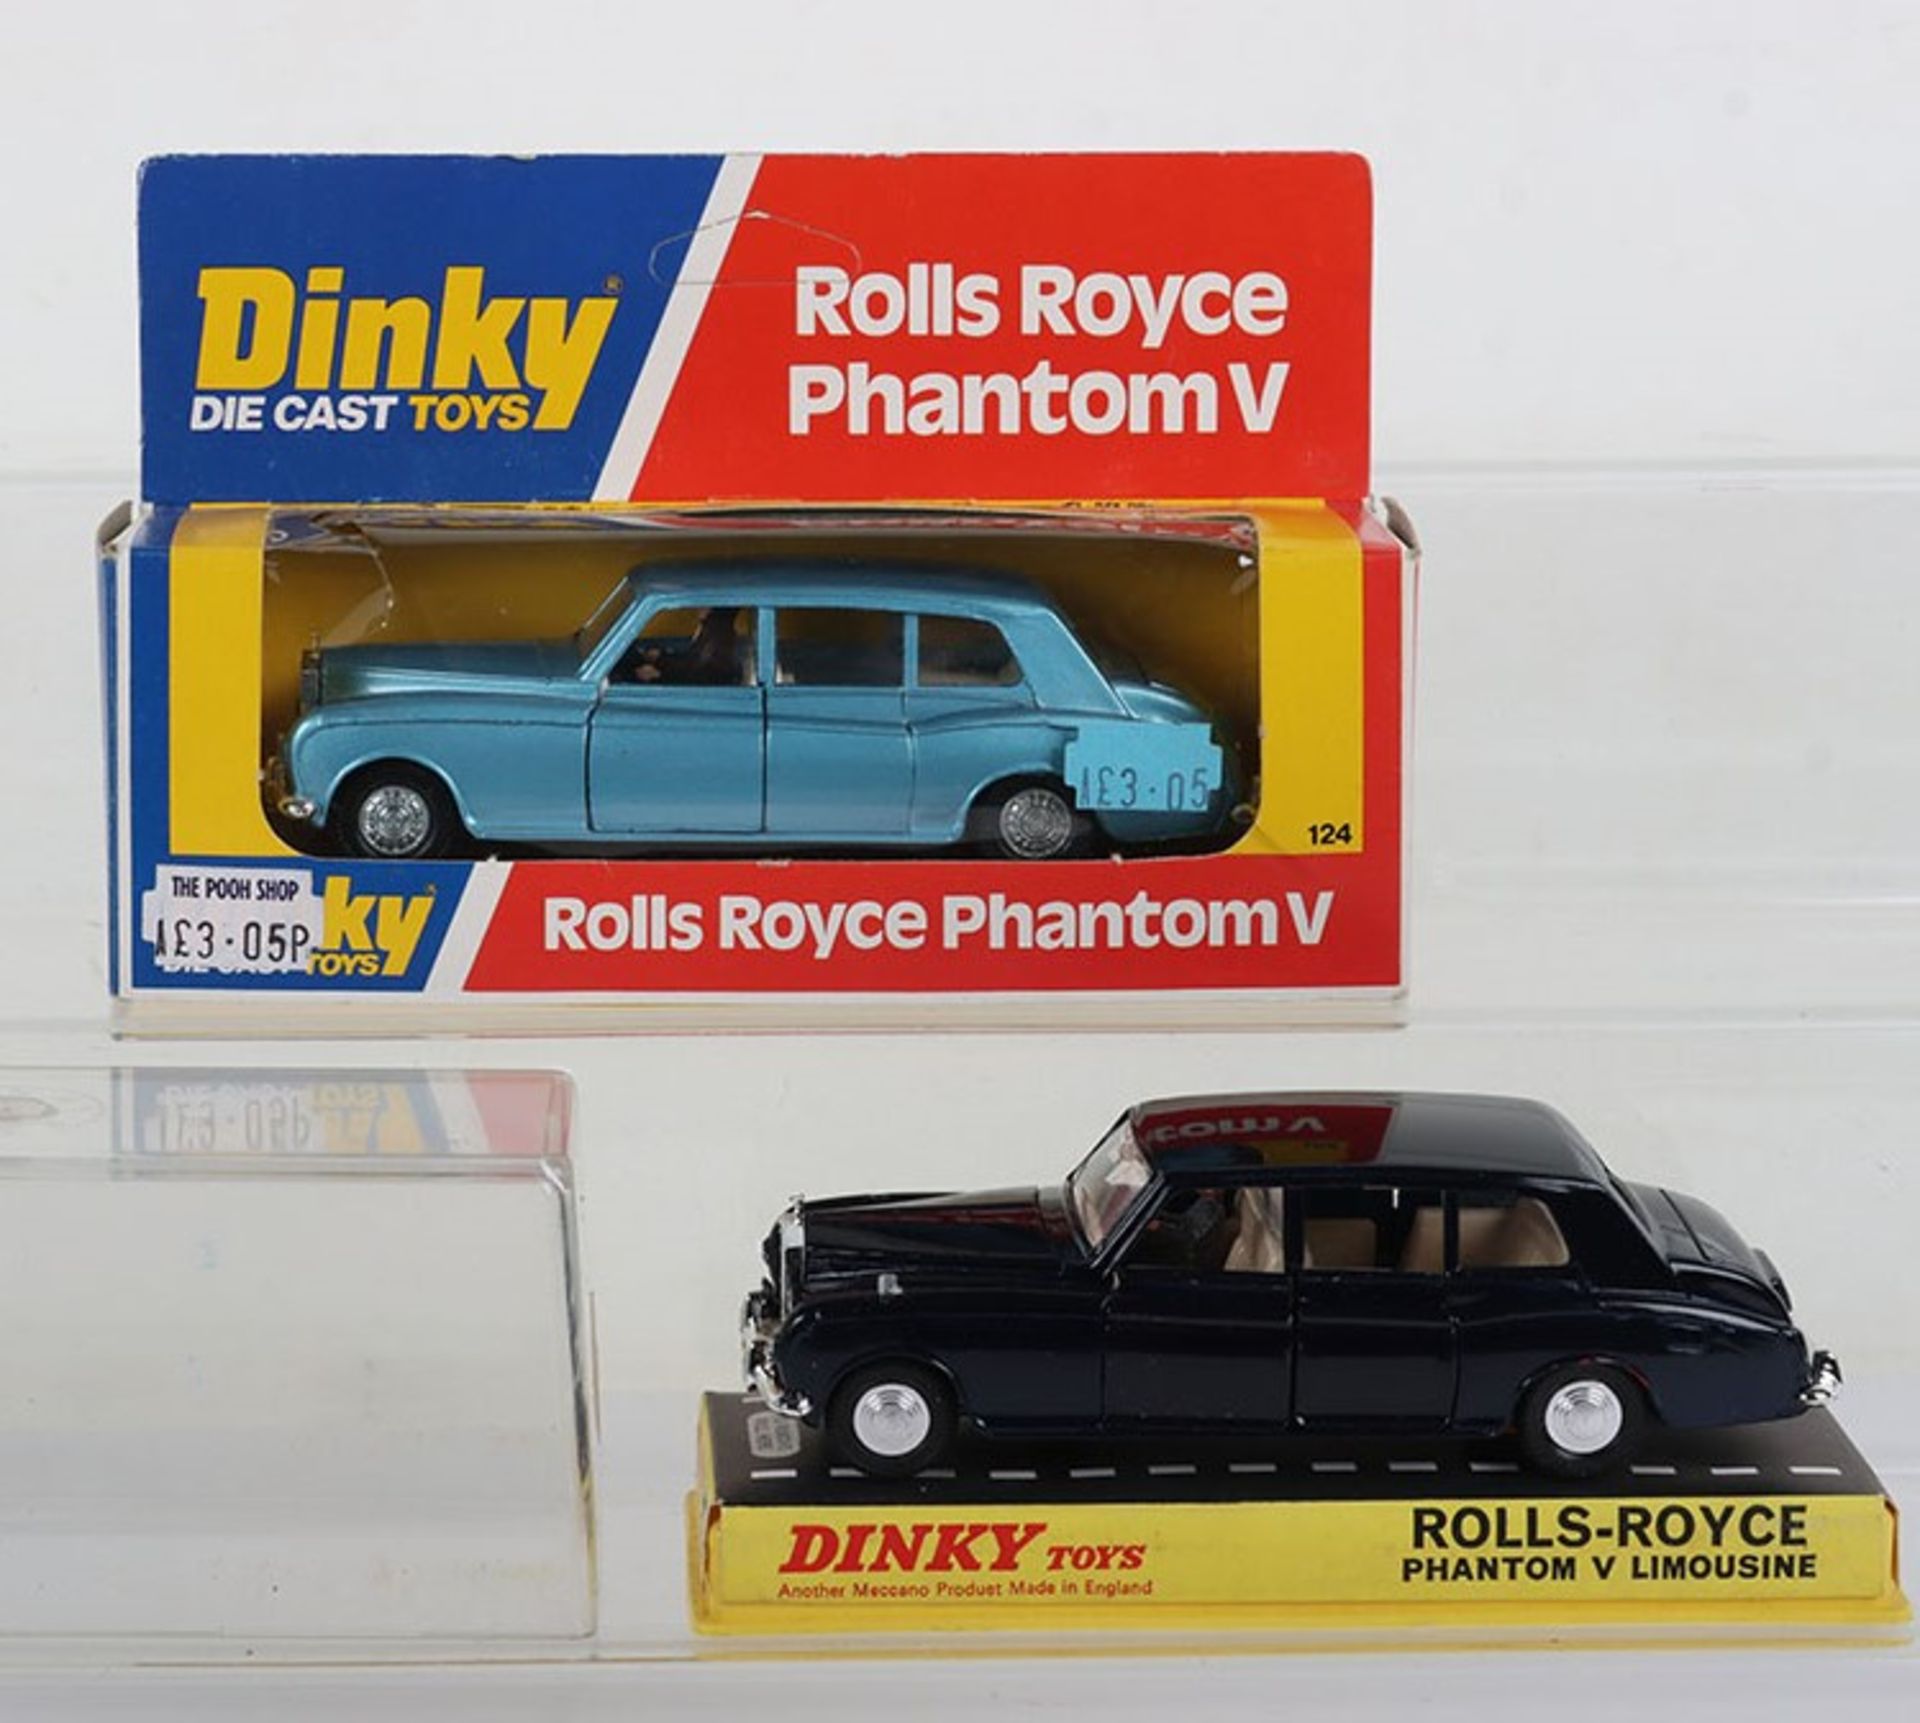 Two Dinky Toys Rolls Royce Phantom V Limousines